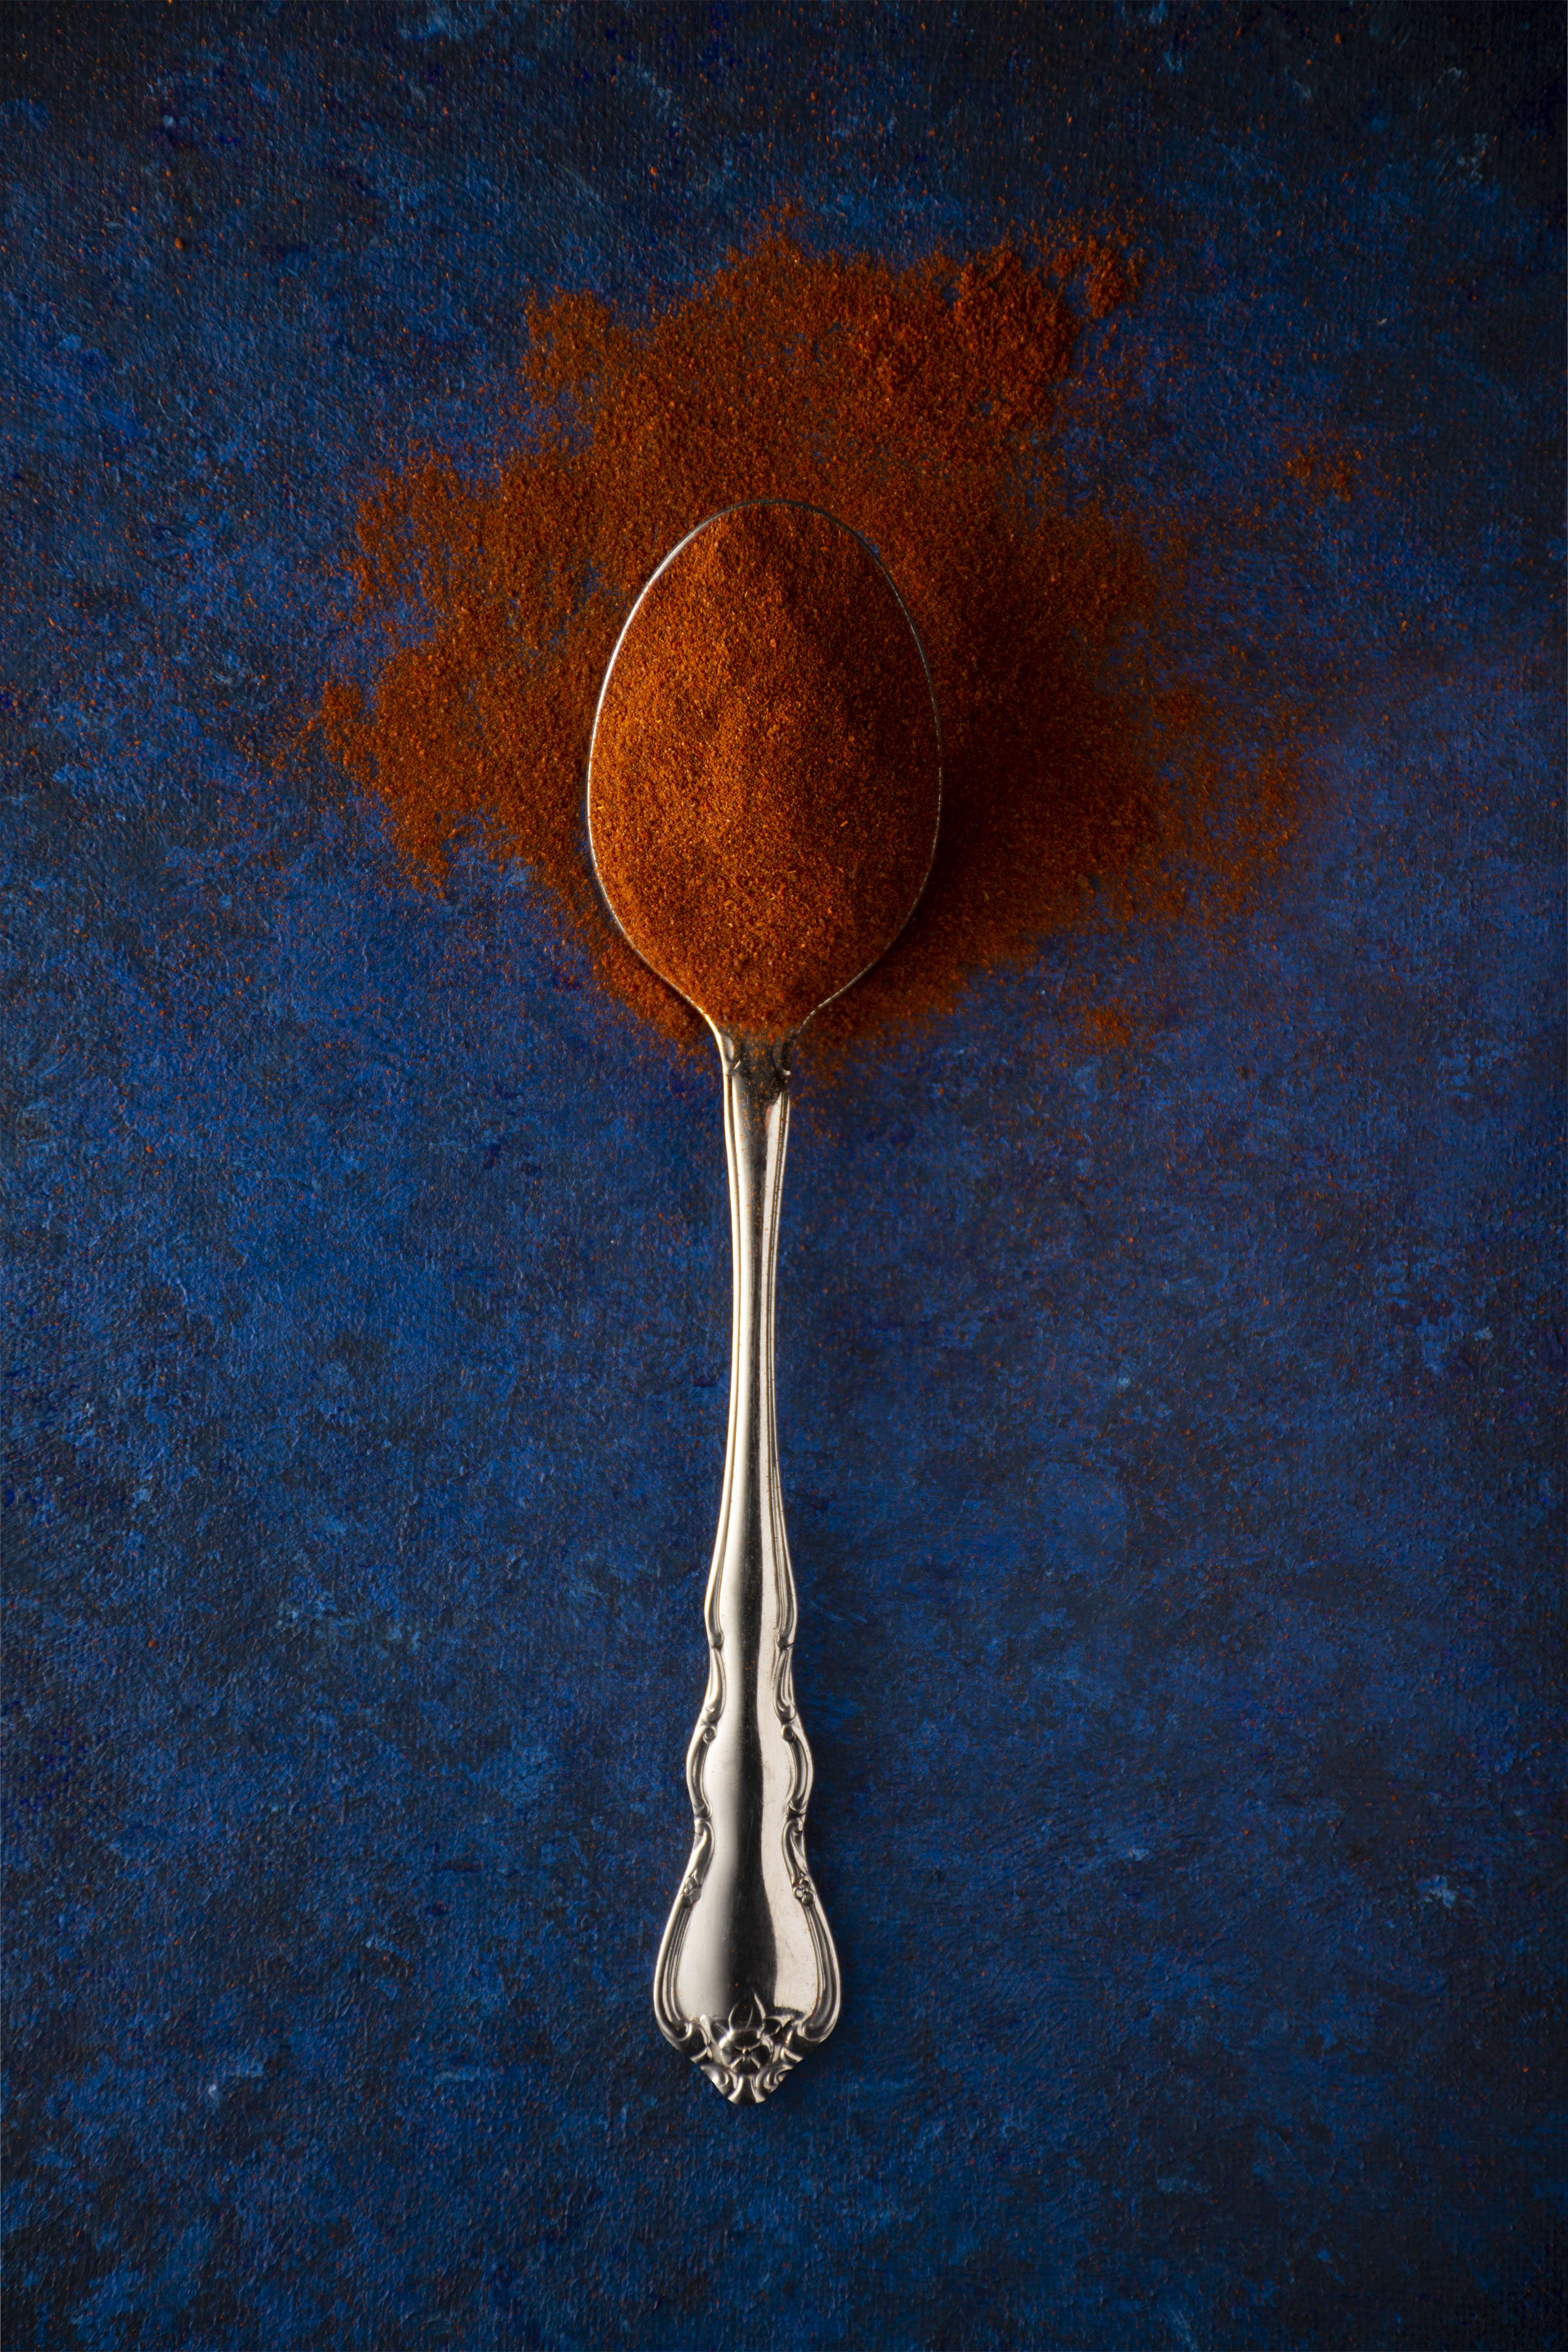 spoon - award winning photography